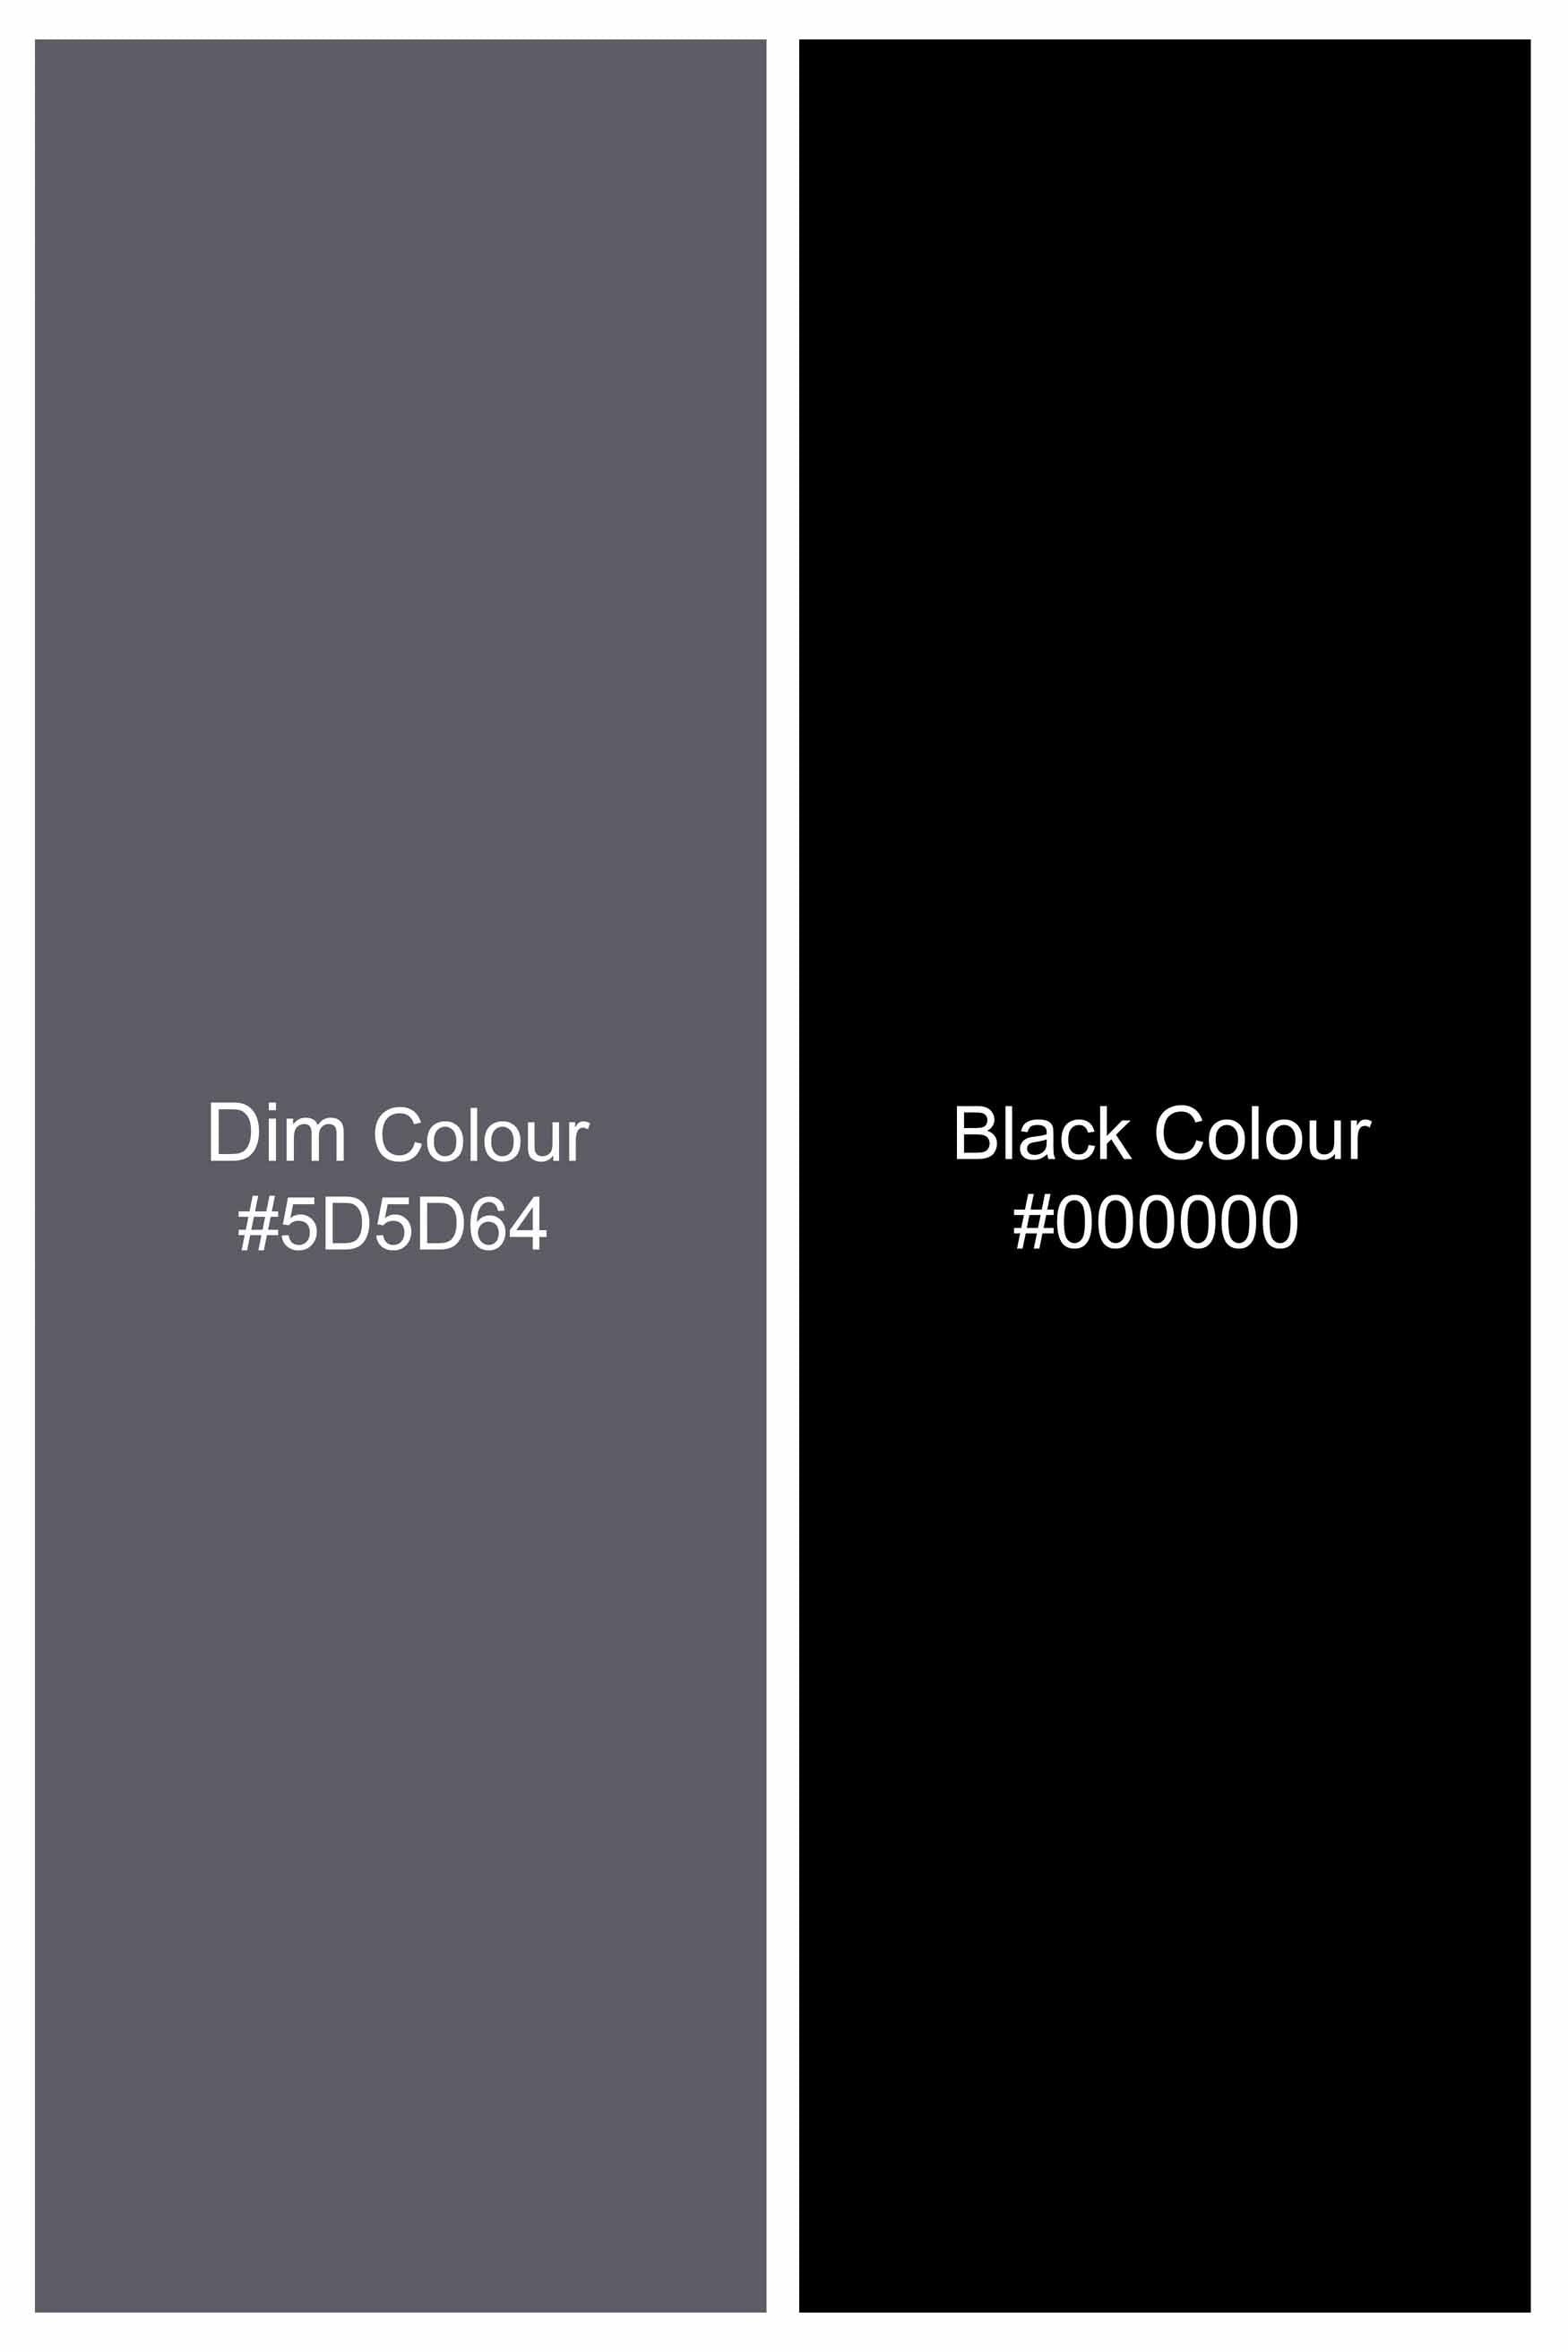 Dim Gray with Black Pockets Chambray Designer Shirt